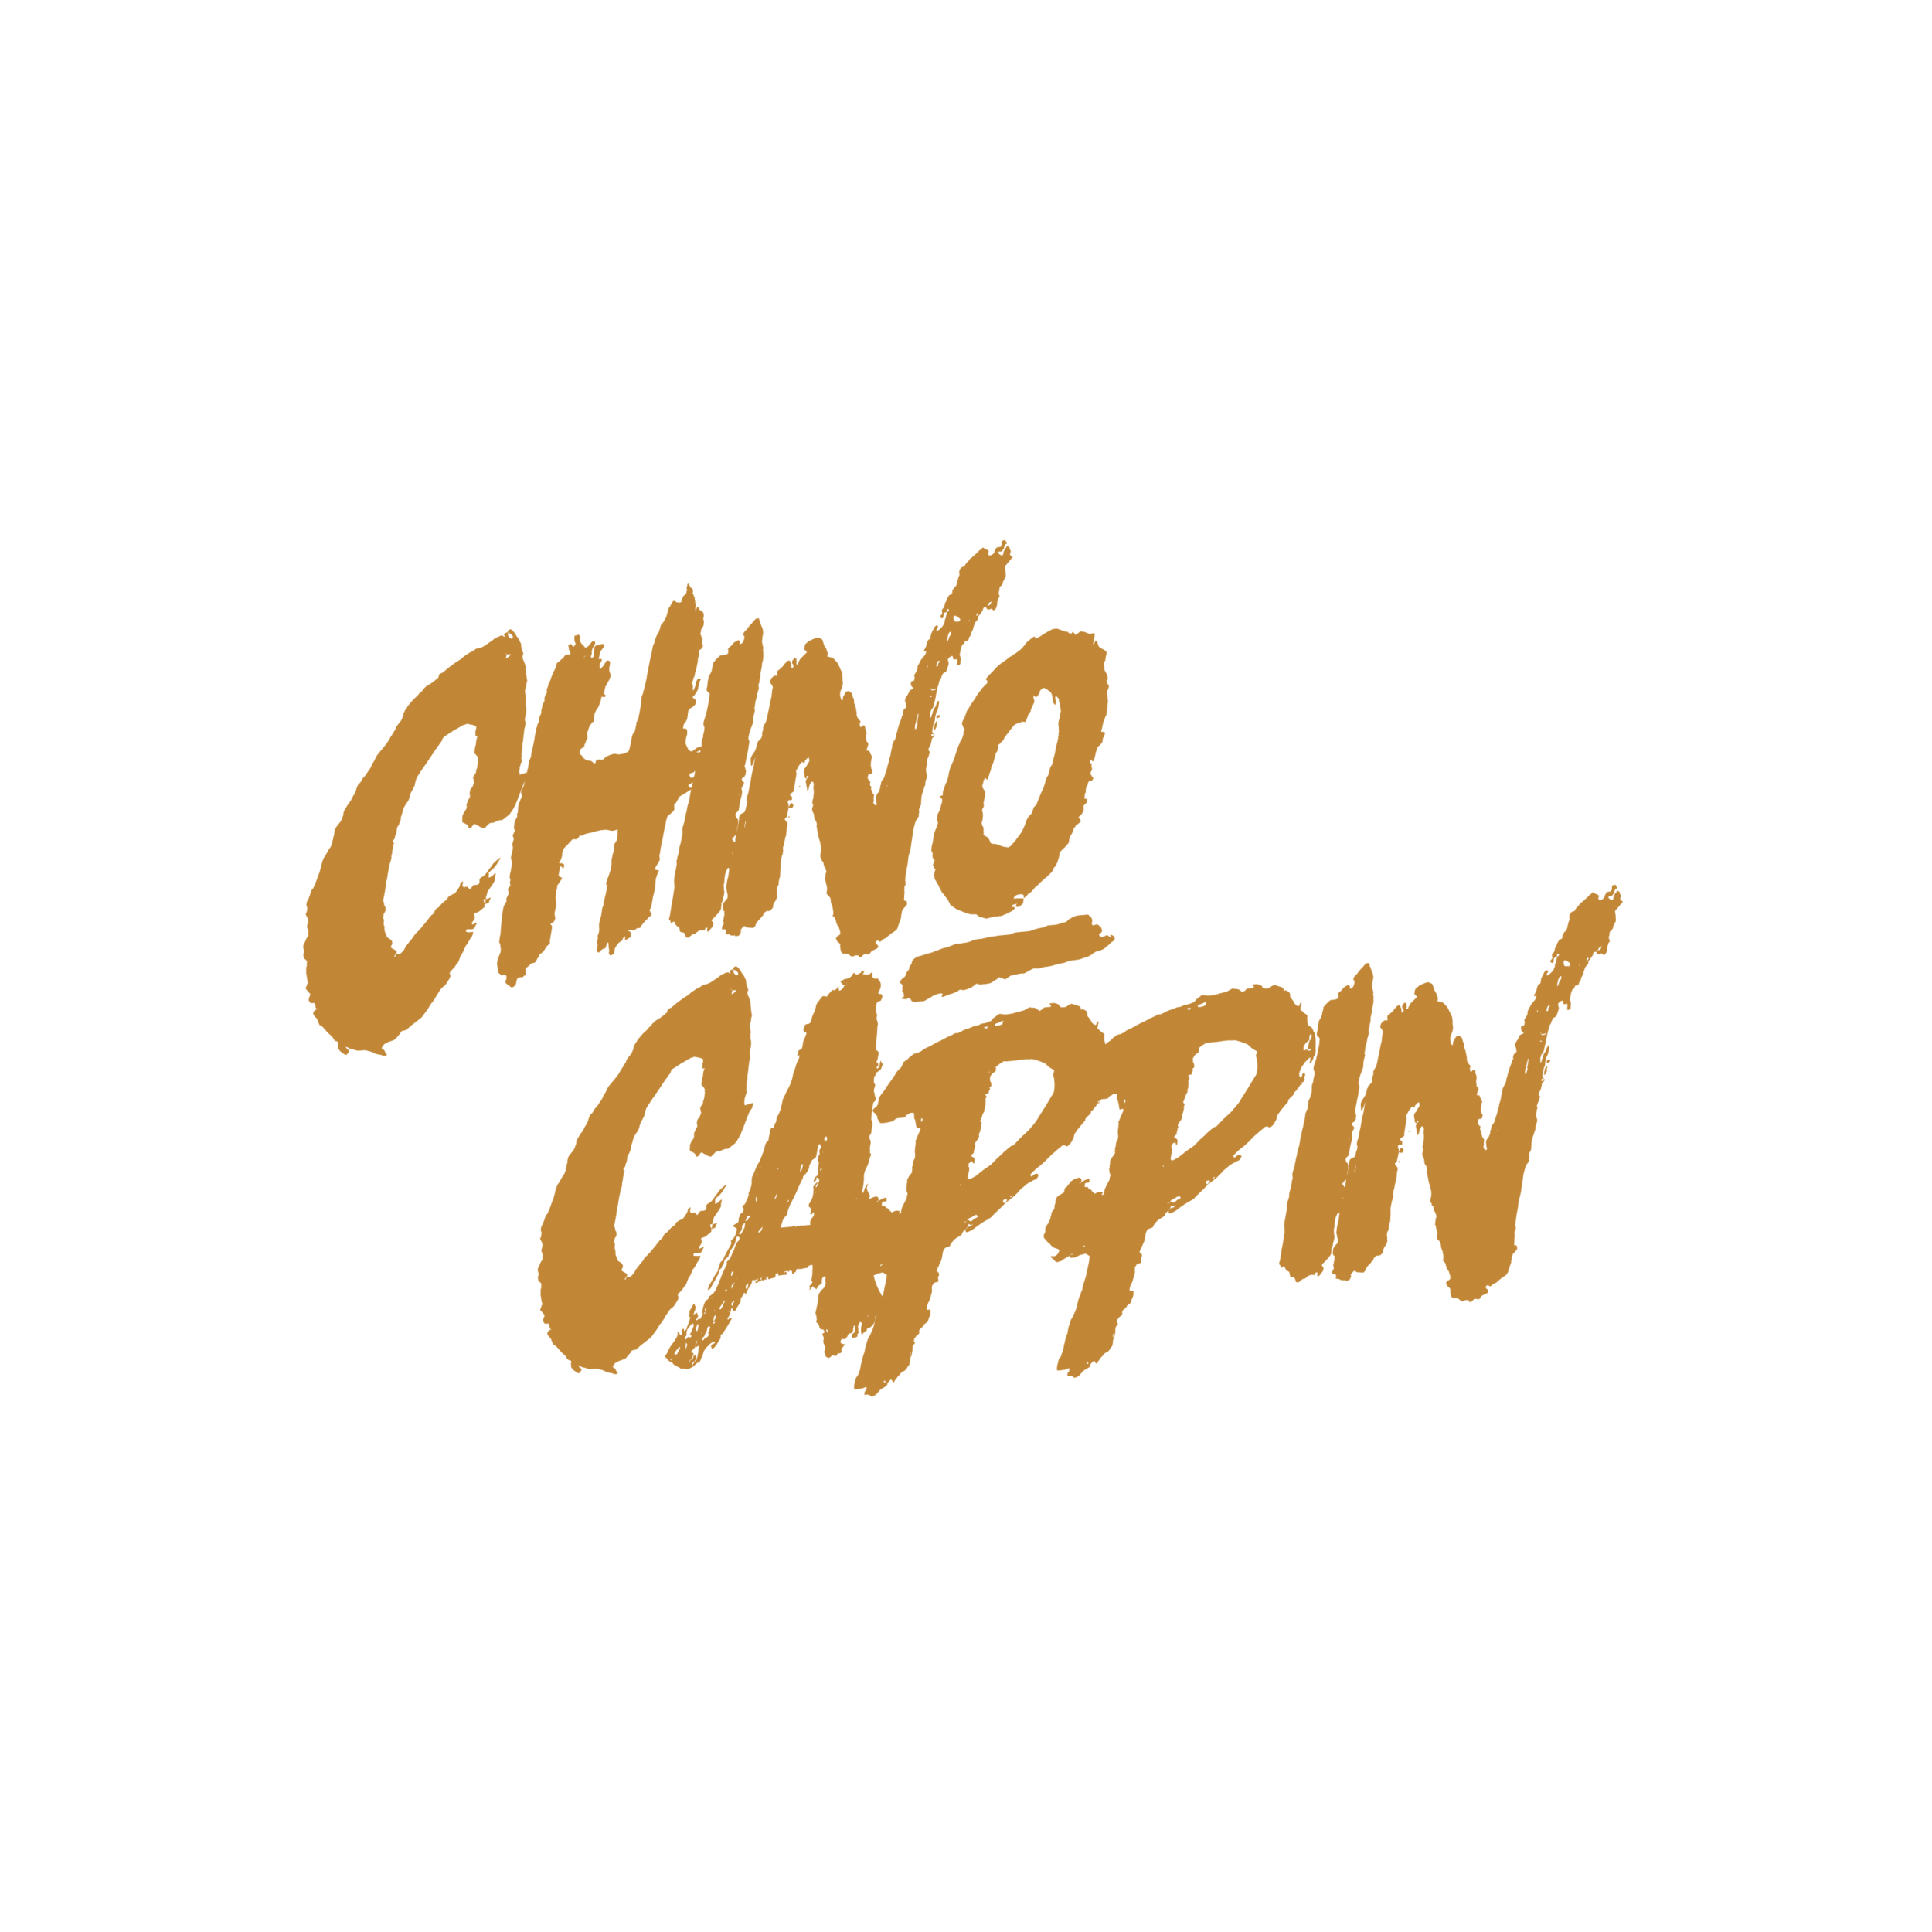 chino capin logo.png